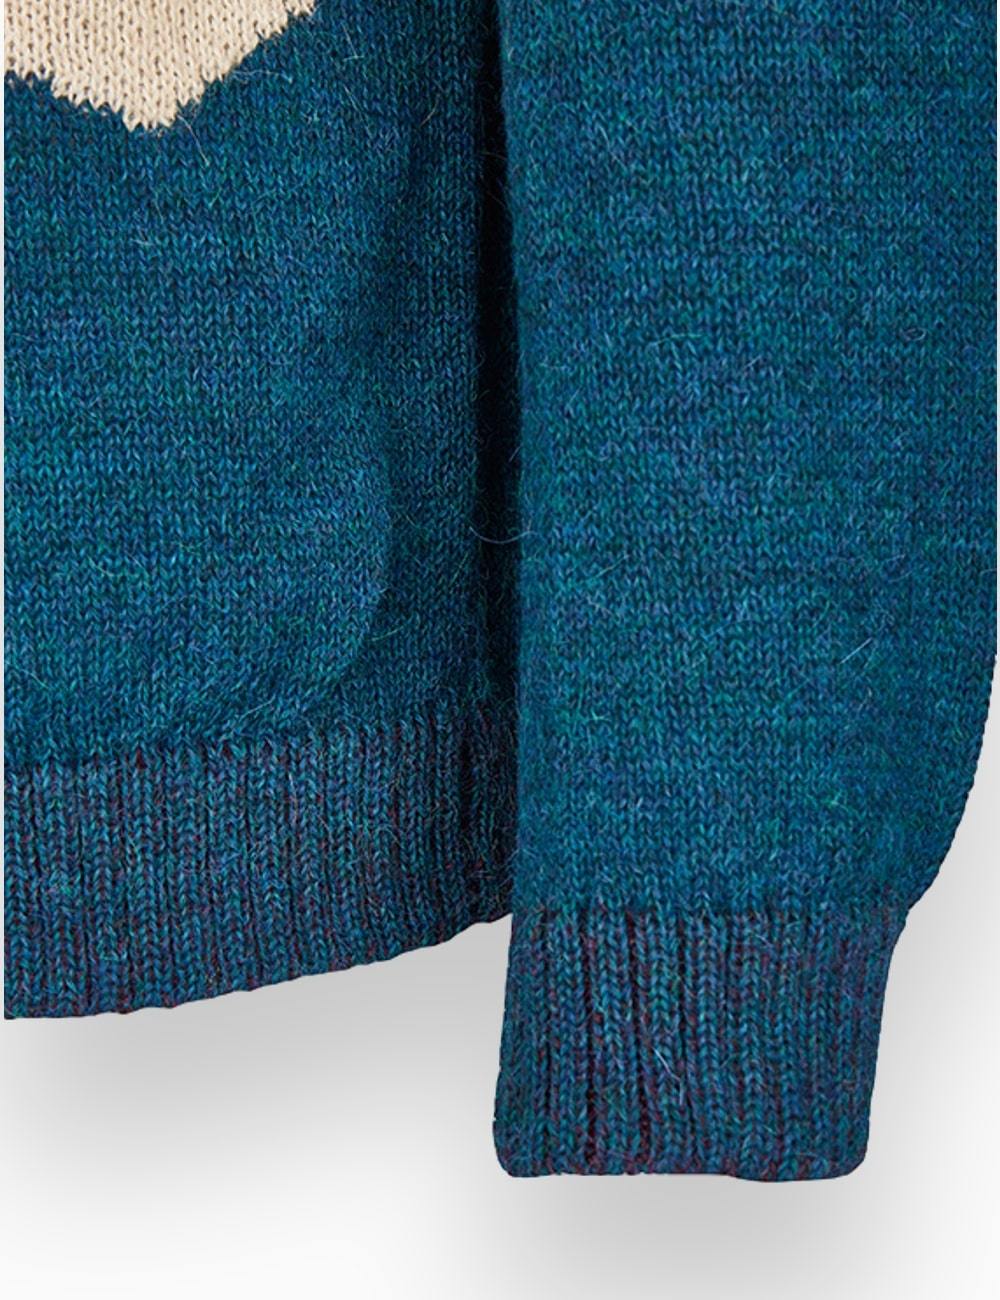 Handmade Alpaca Jumper Maras Clay Buy Handmade Ethical Knitwear On The Good Apparel Sustainable Fashion Clean Beauty